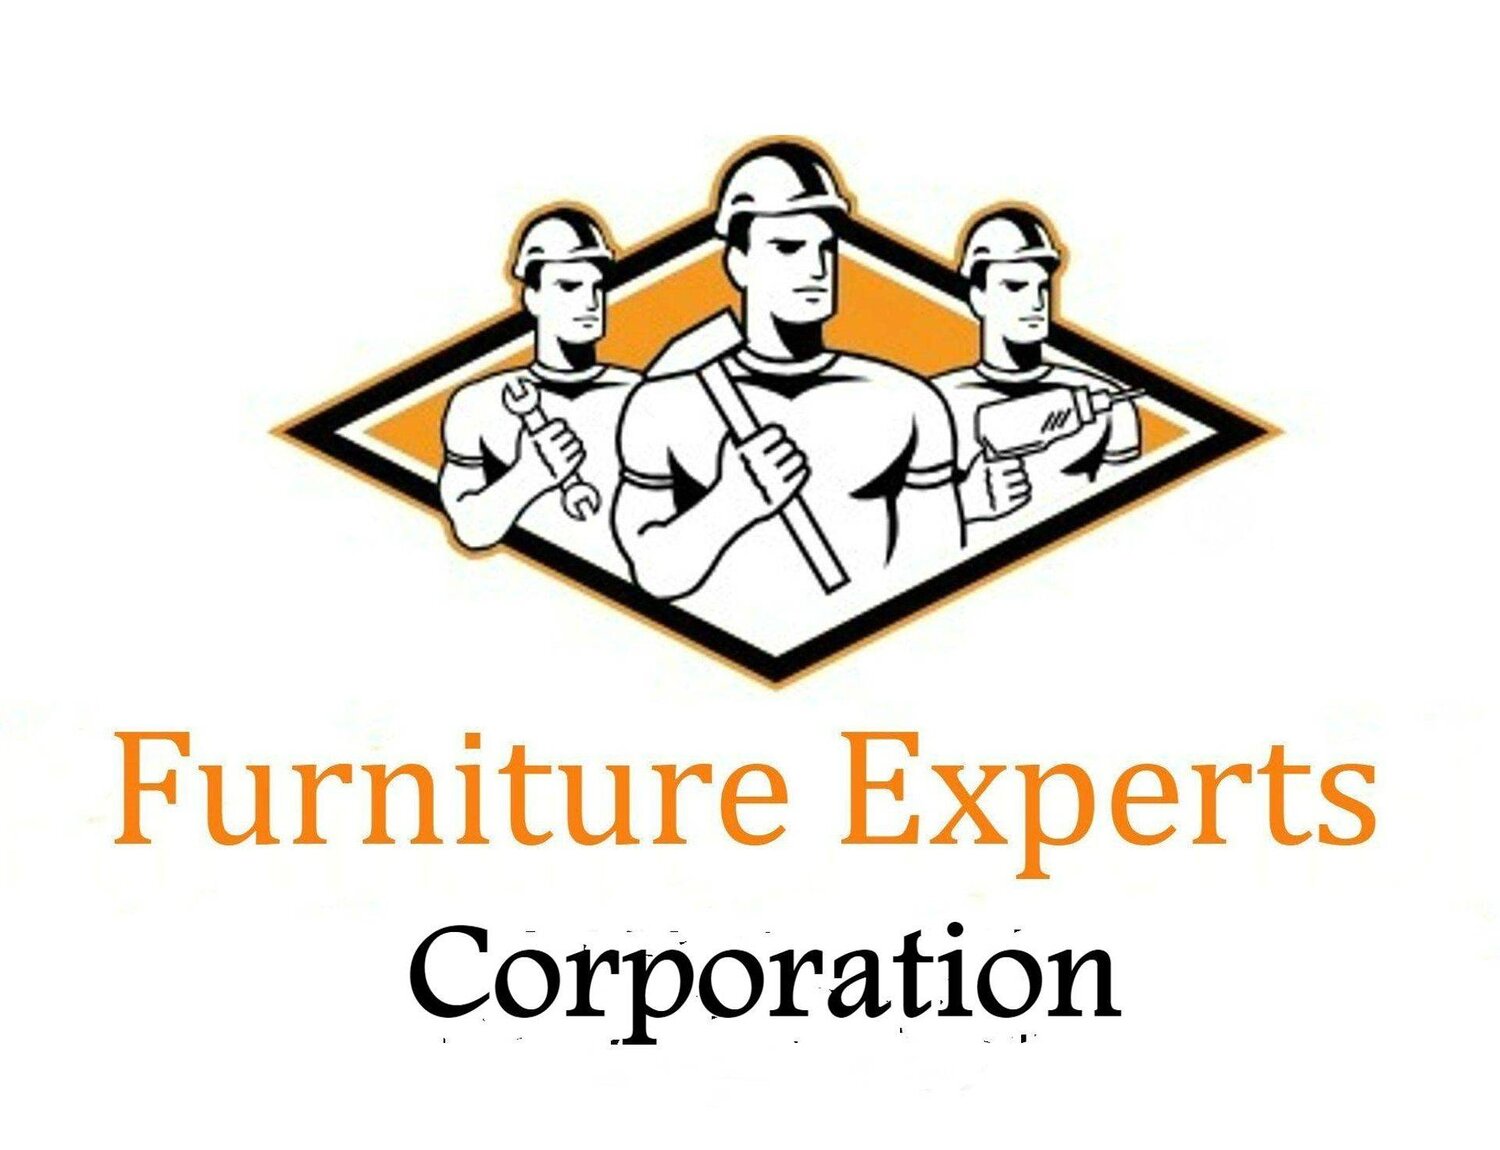 Furniture experts corporation